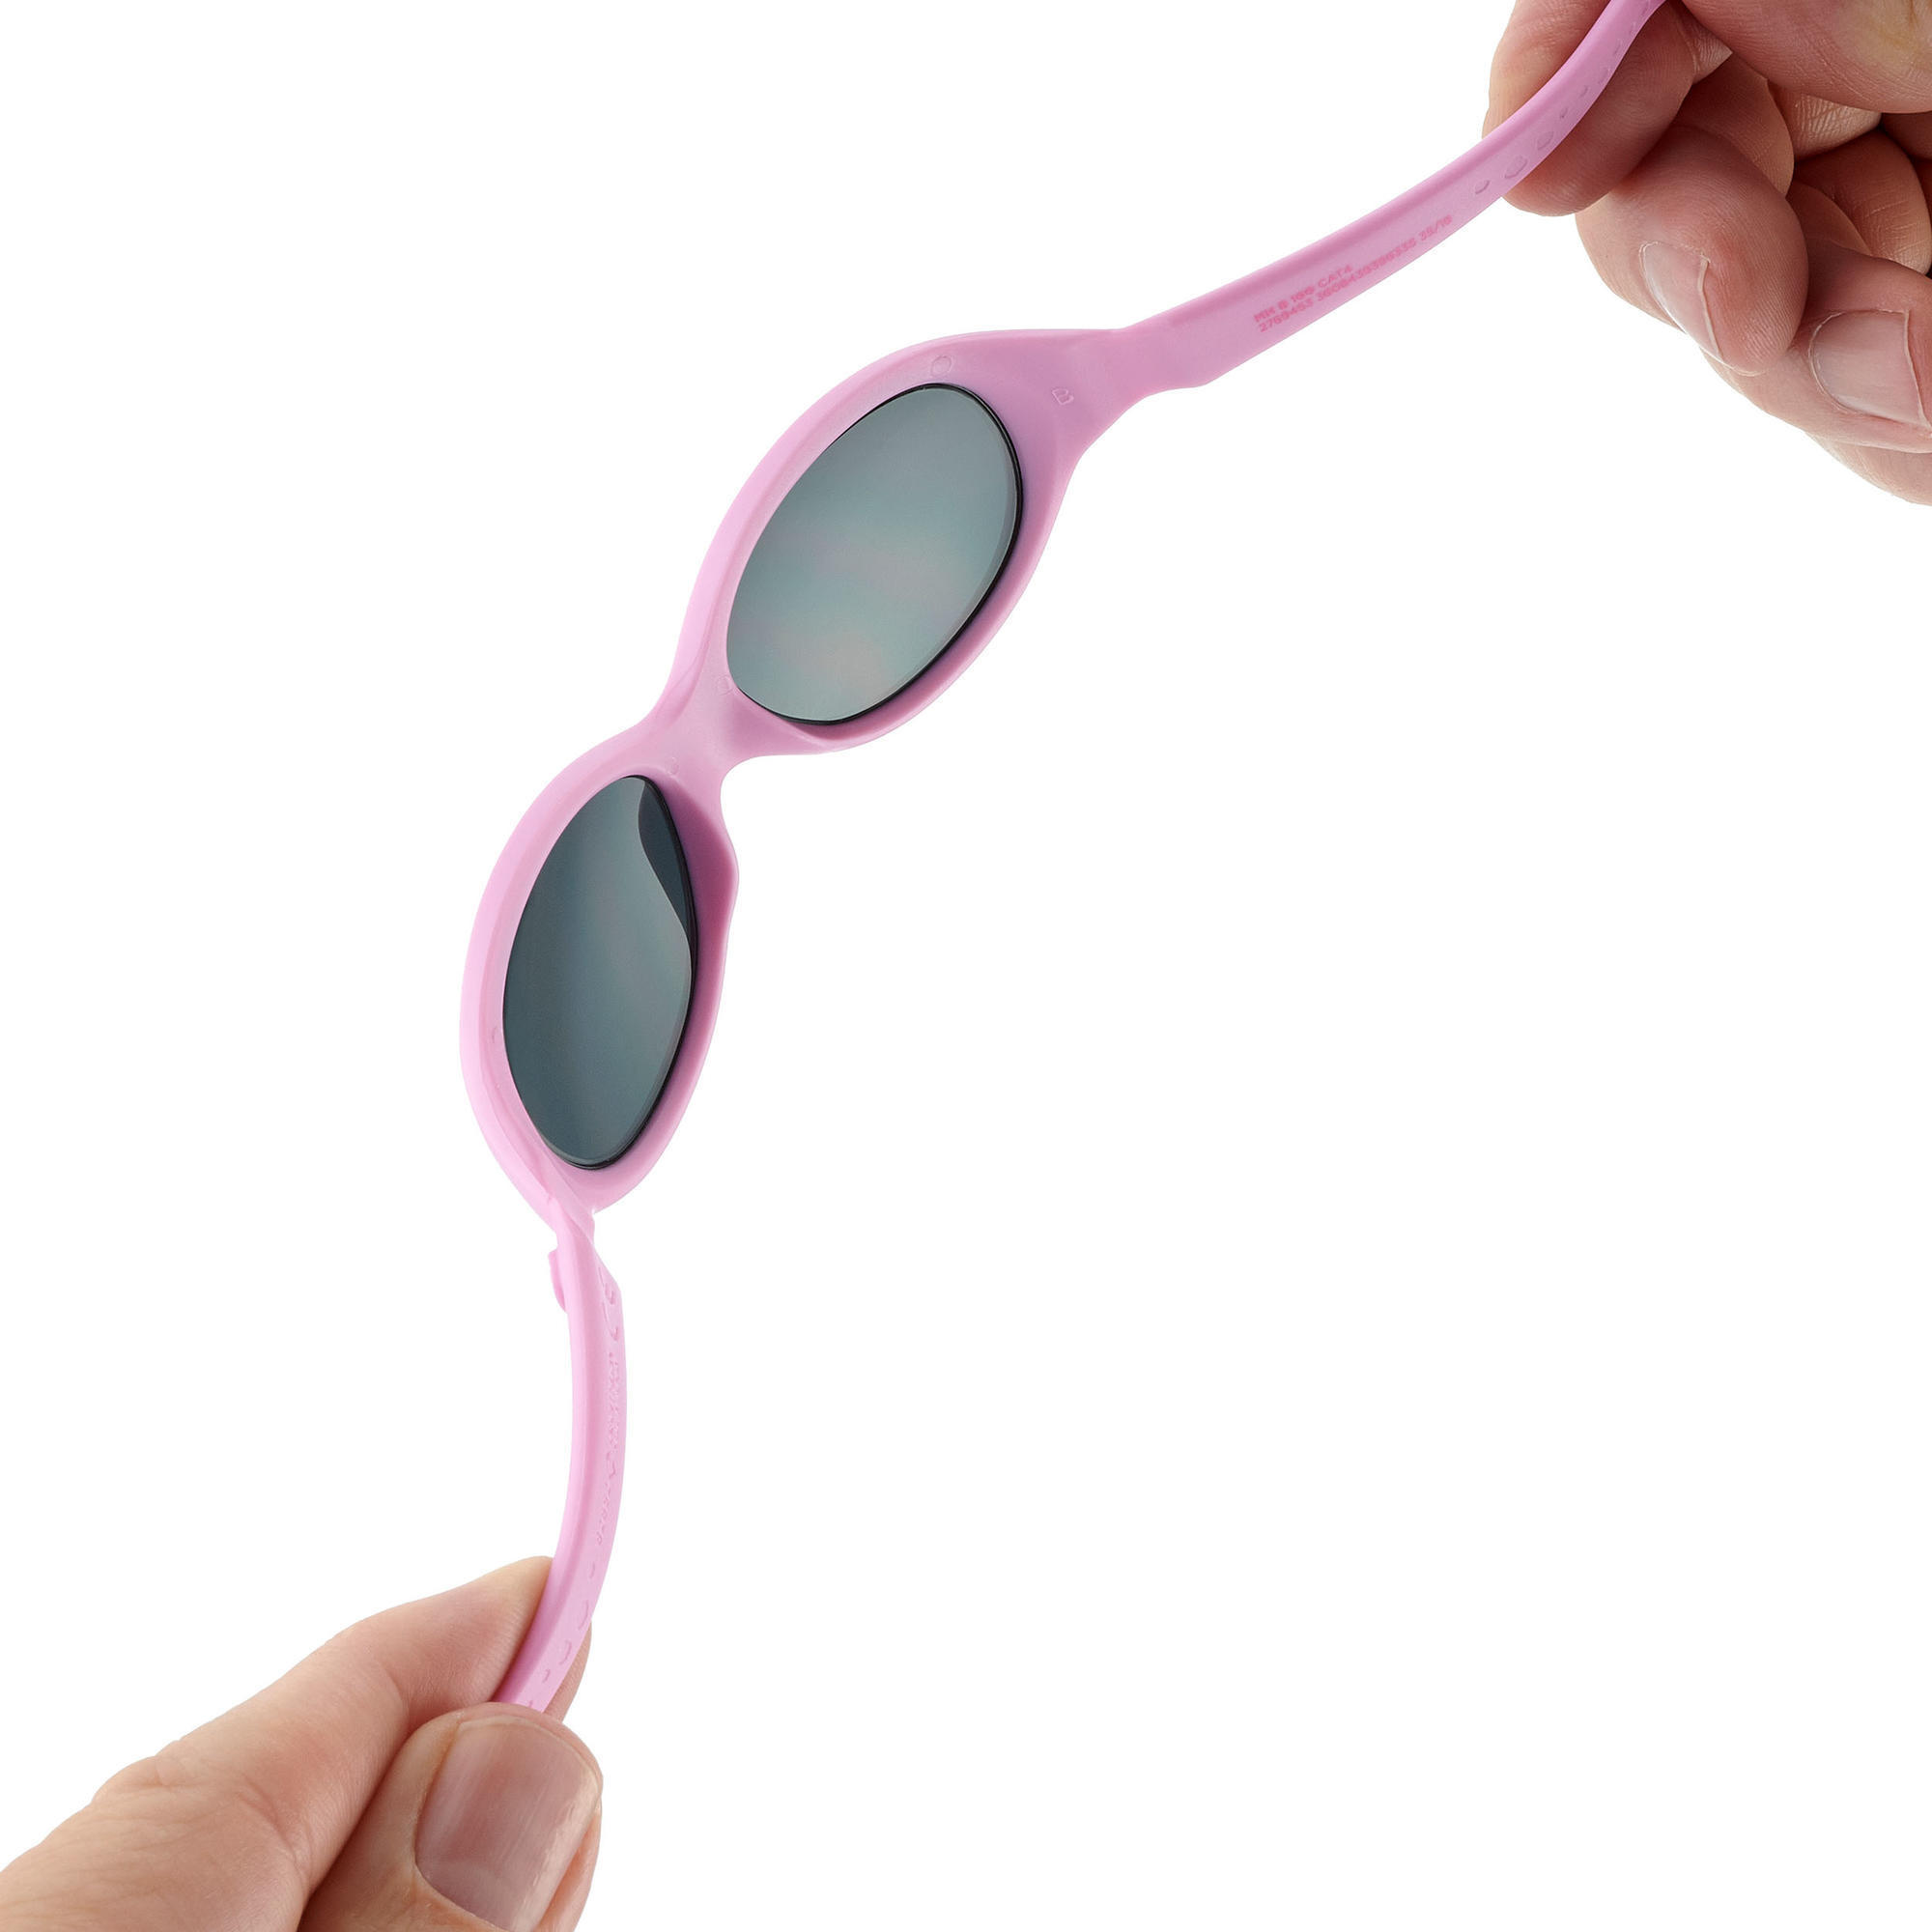 decathlon baby sunglasses